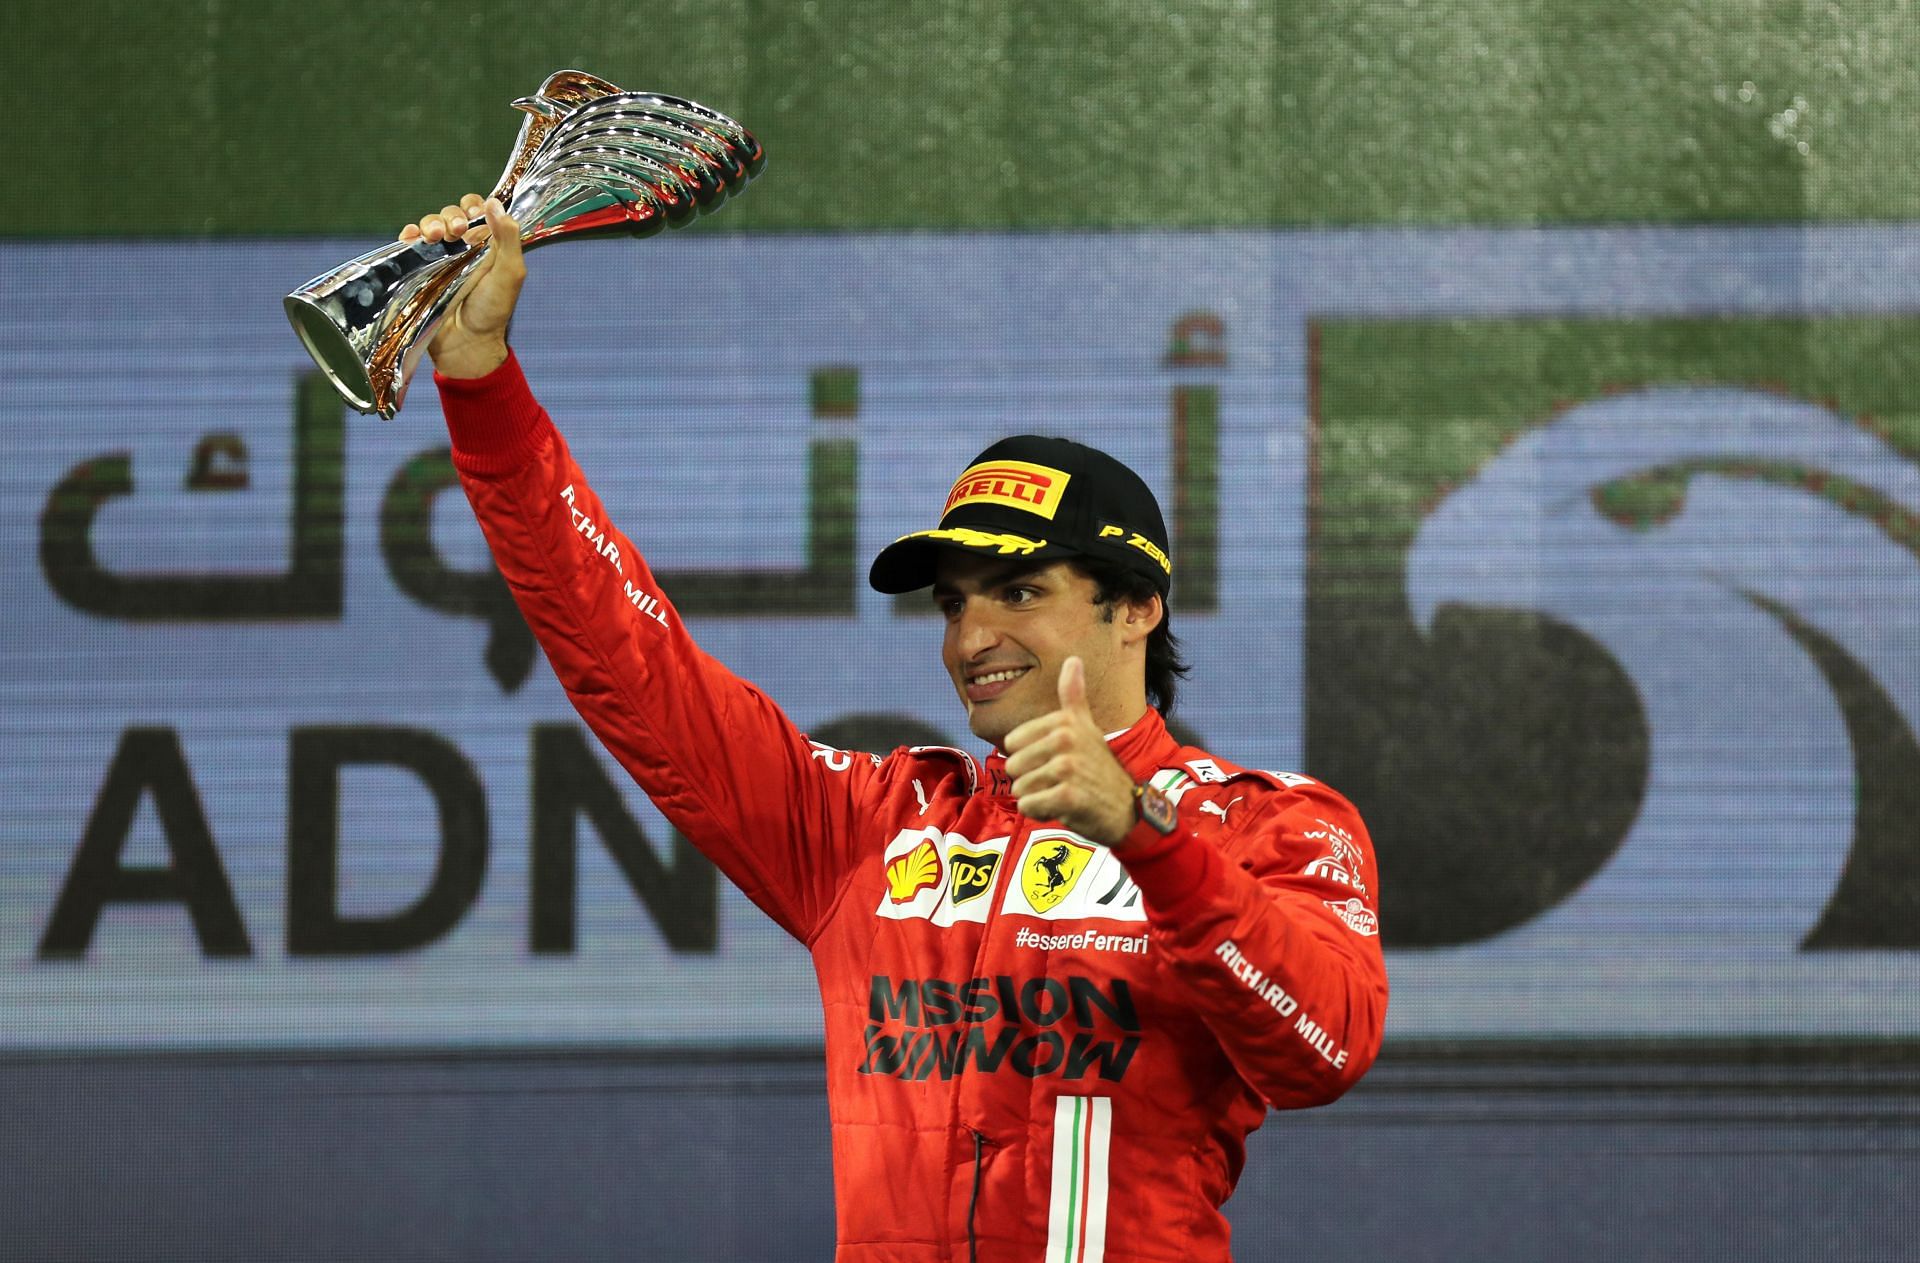 F1 Grand Prix of Abu Dhabi - Carlos Sainz on the podium